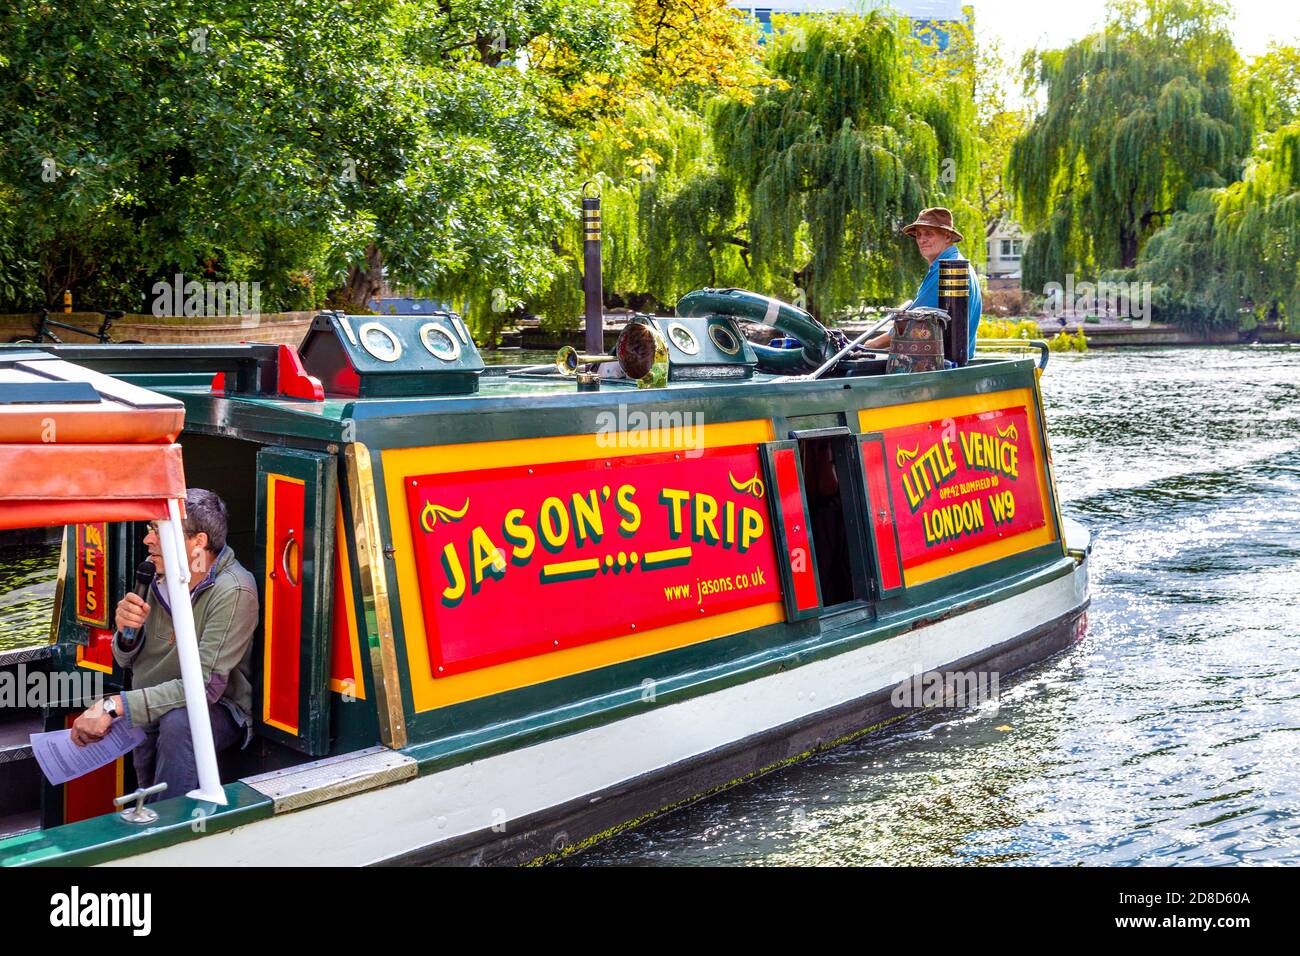 Jason's Trip Canal Tour Barge in Little Venice, Paddington, London, UK Stock Photo